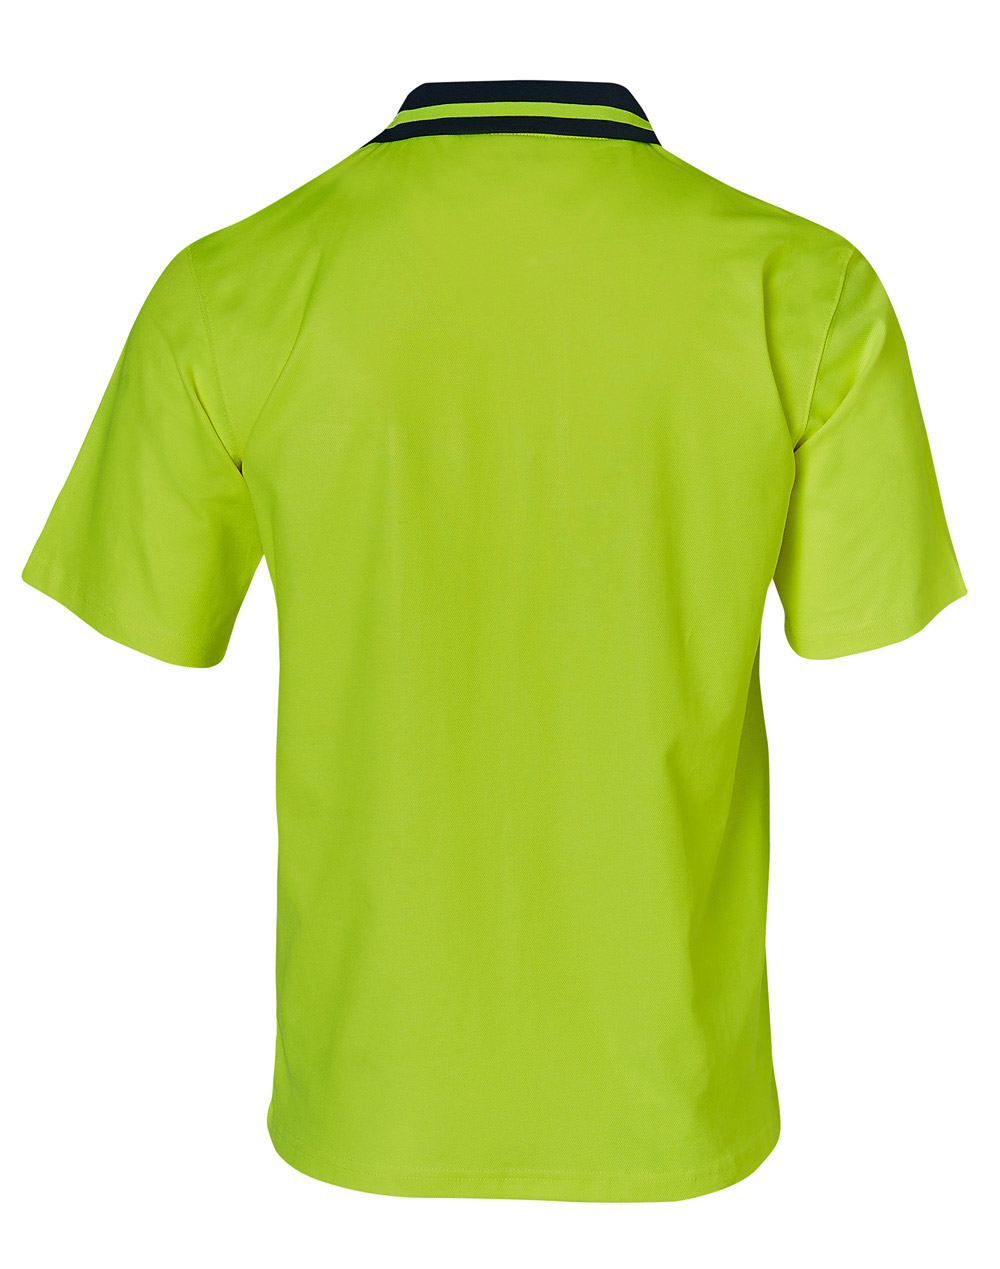 Custom Made (Fluoro Yellow Navy) Safety Short Sleeve Polo Shirts Online Perth Australia